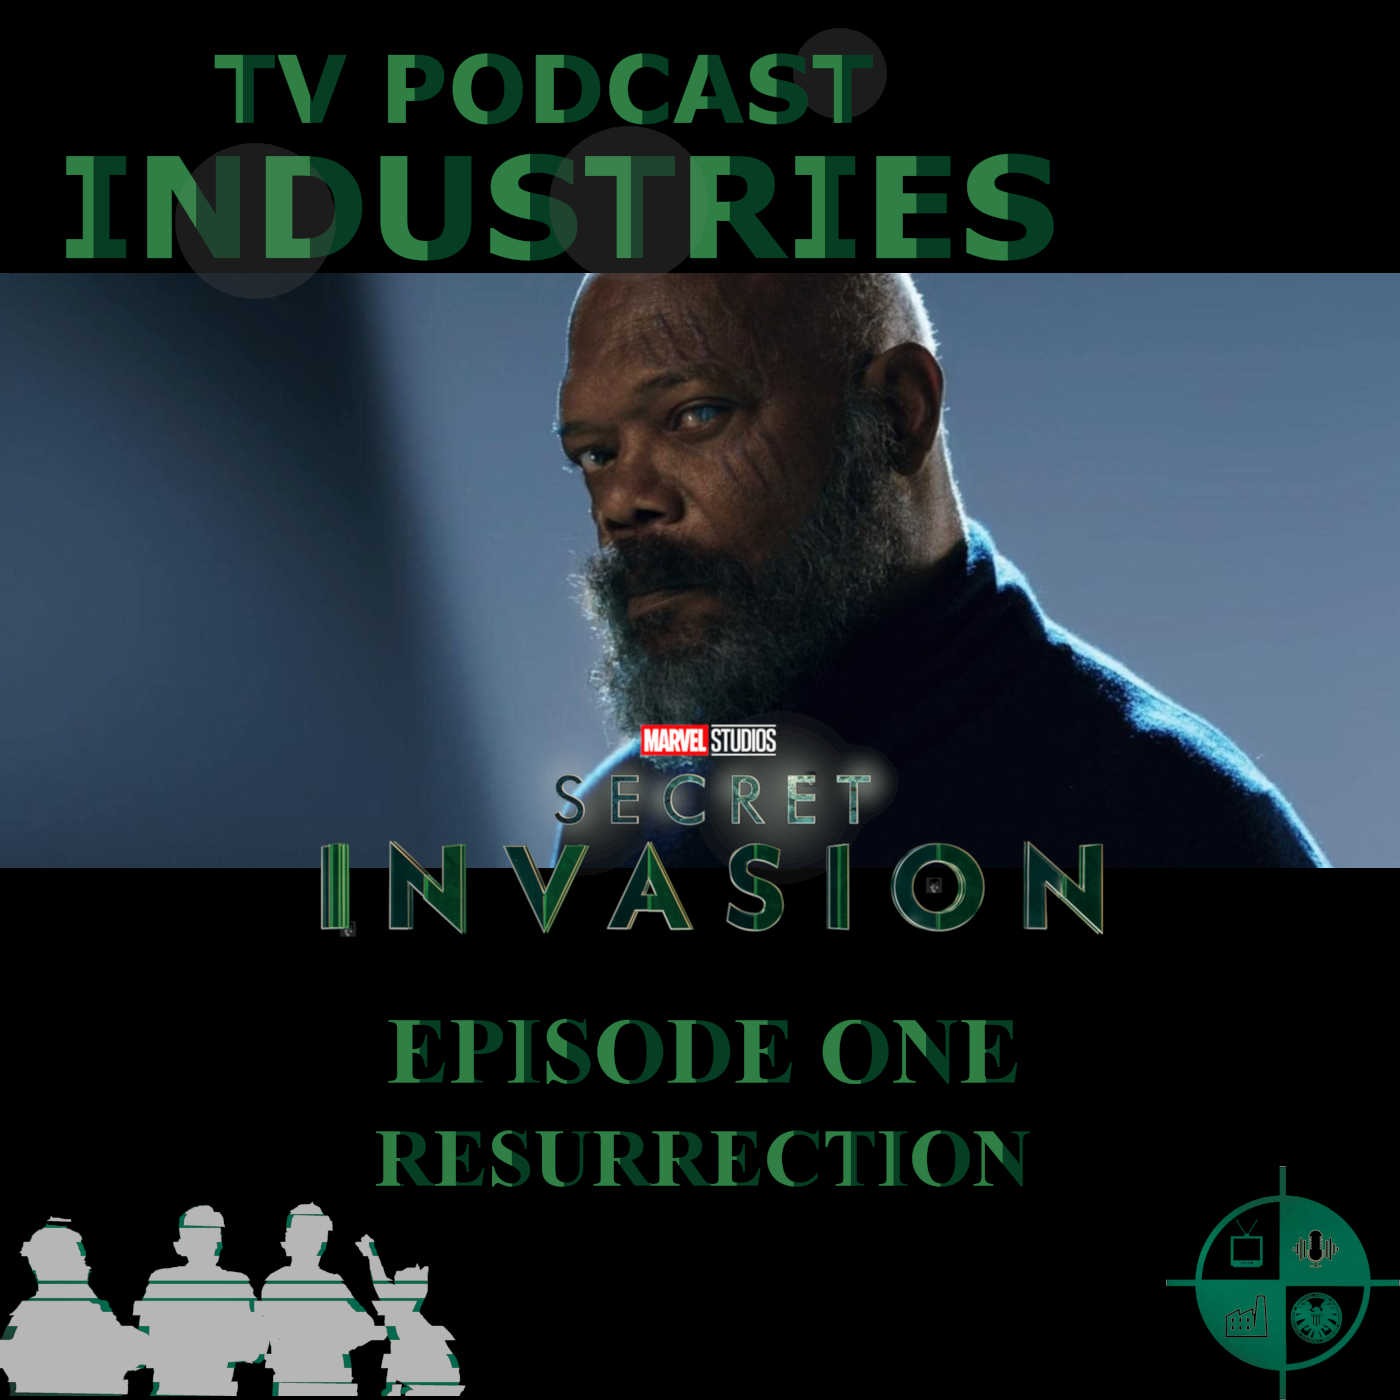 Secret Invasion Episode 1 "Resurrection" Podcast